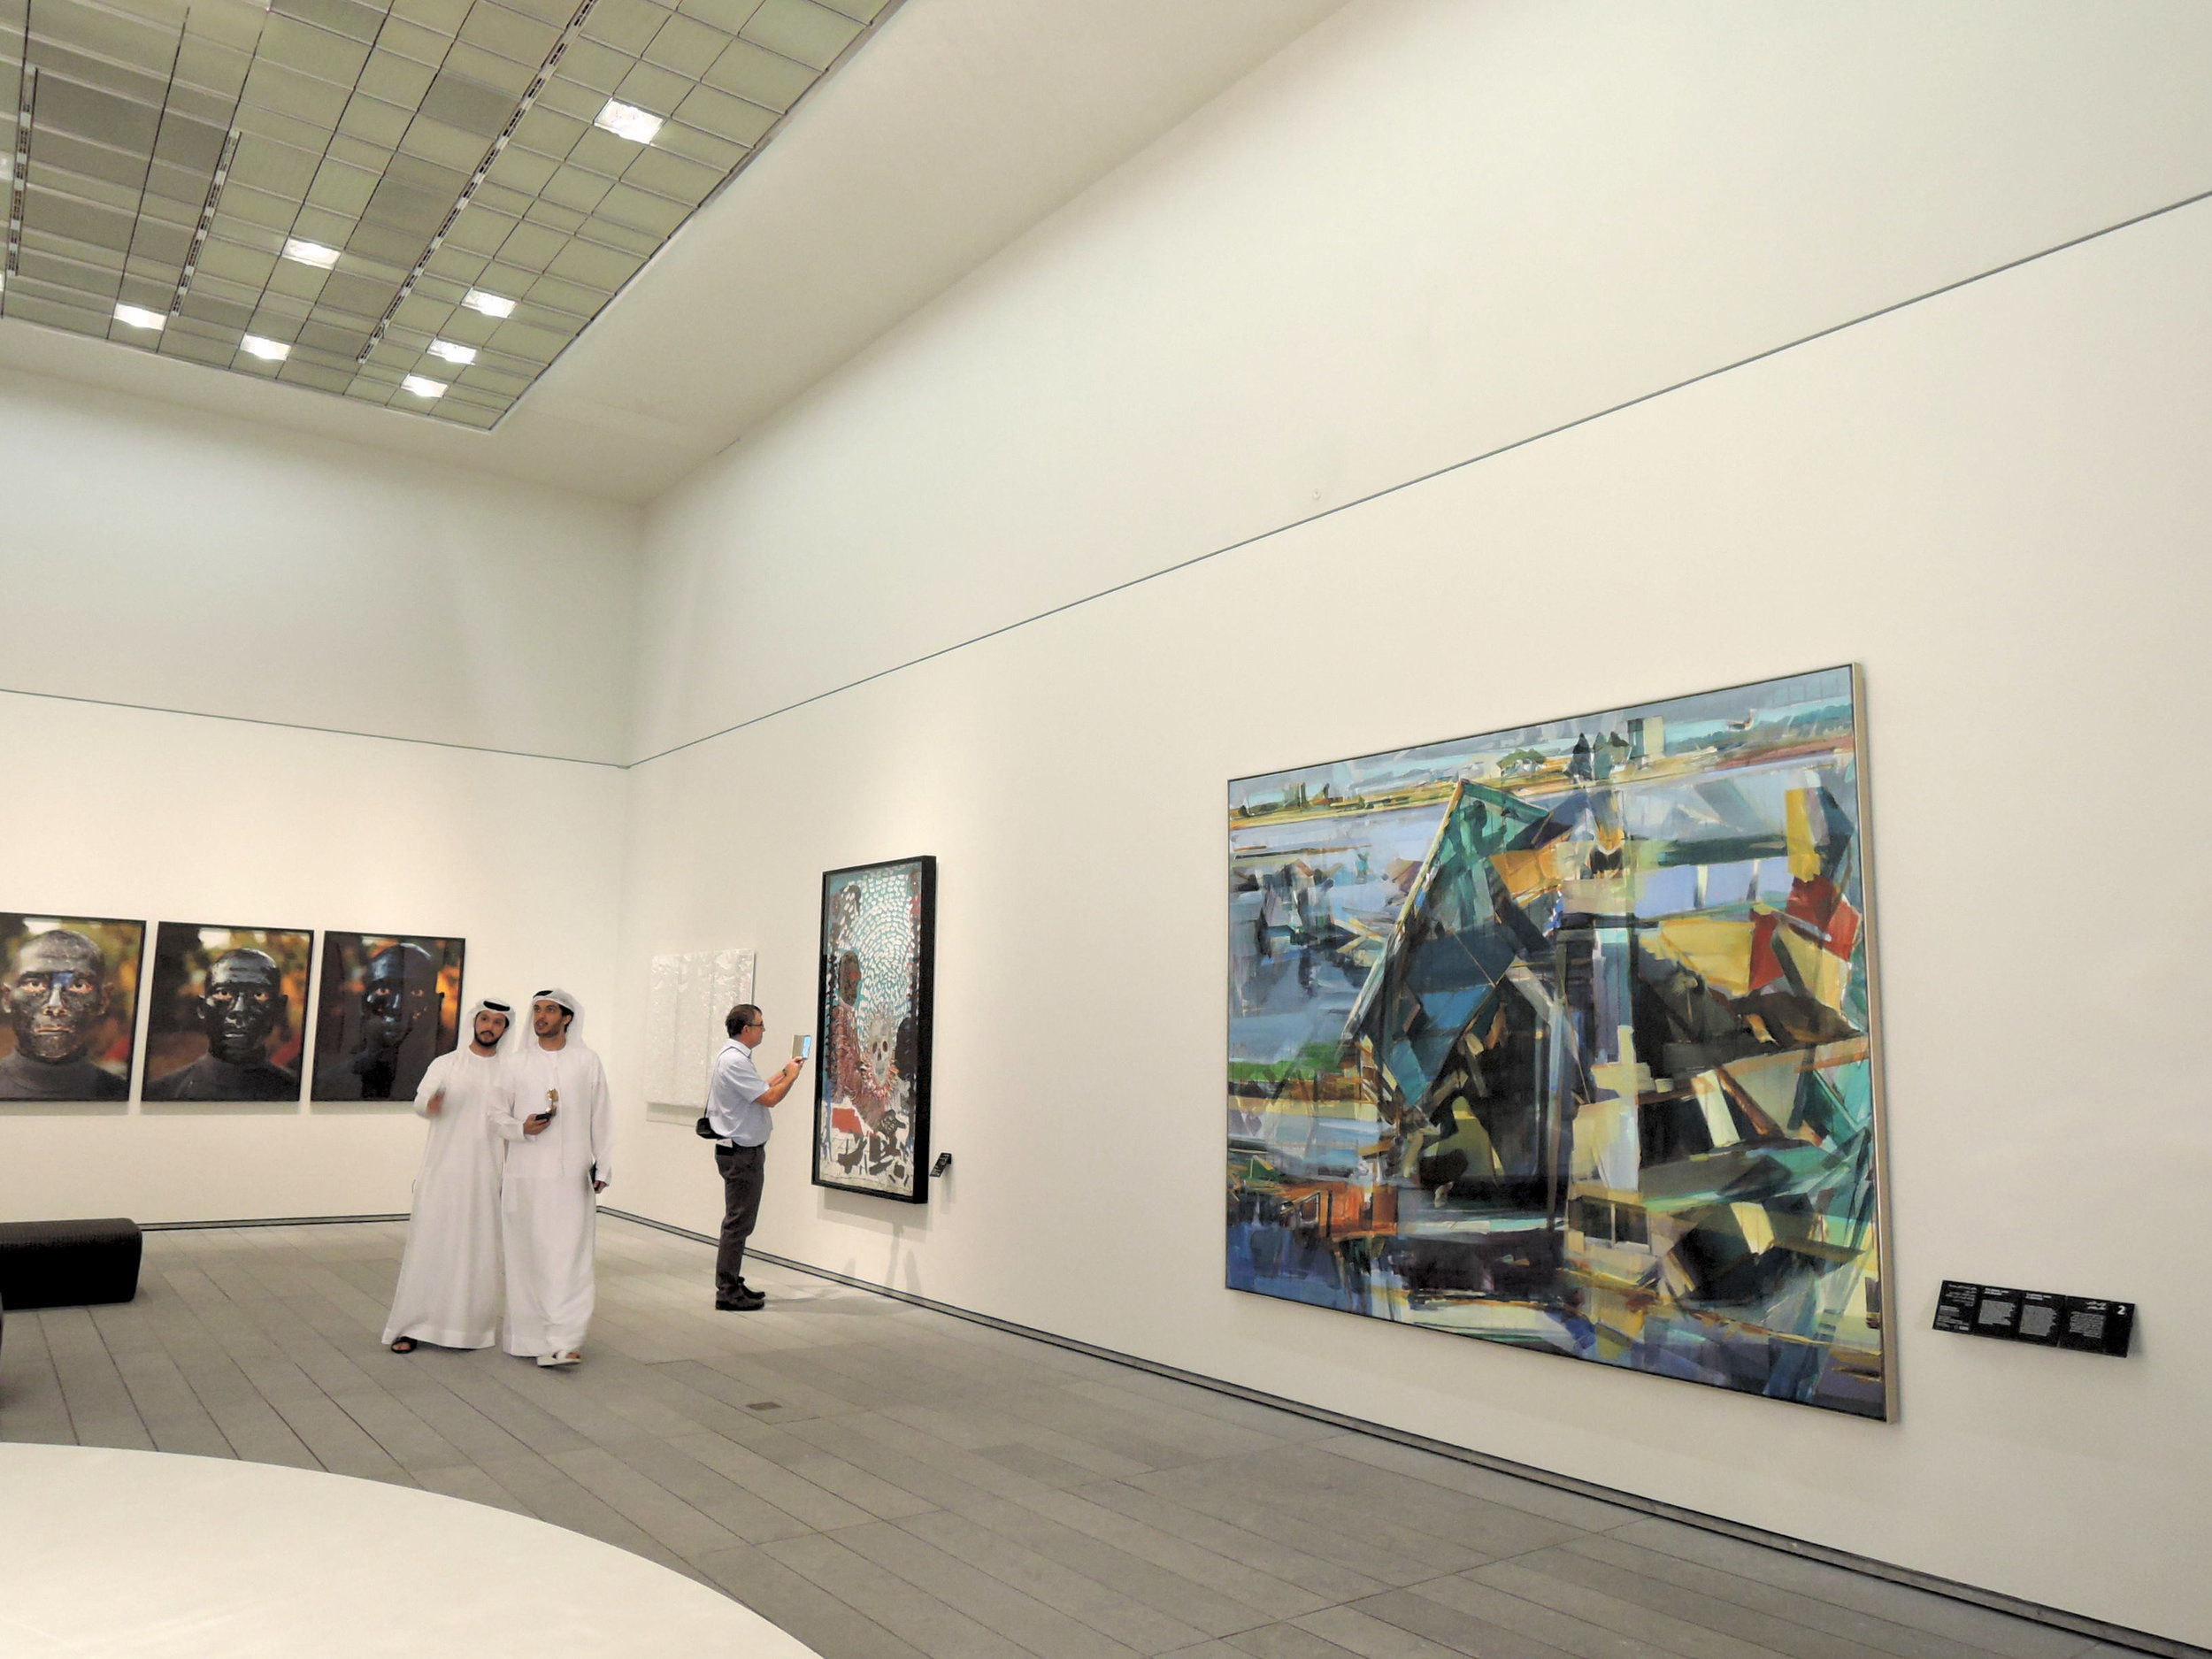    A global stage  , Louvre Abu Dhabi, November 2017, curator Juliette Singer. Artists in view Zang Huan, Mounir Fatmi, Omar Ba, Duncan Wylie 